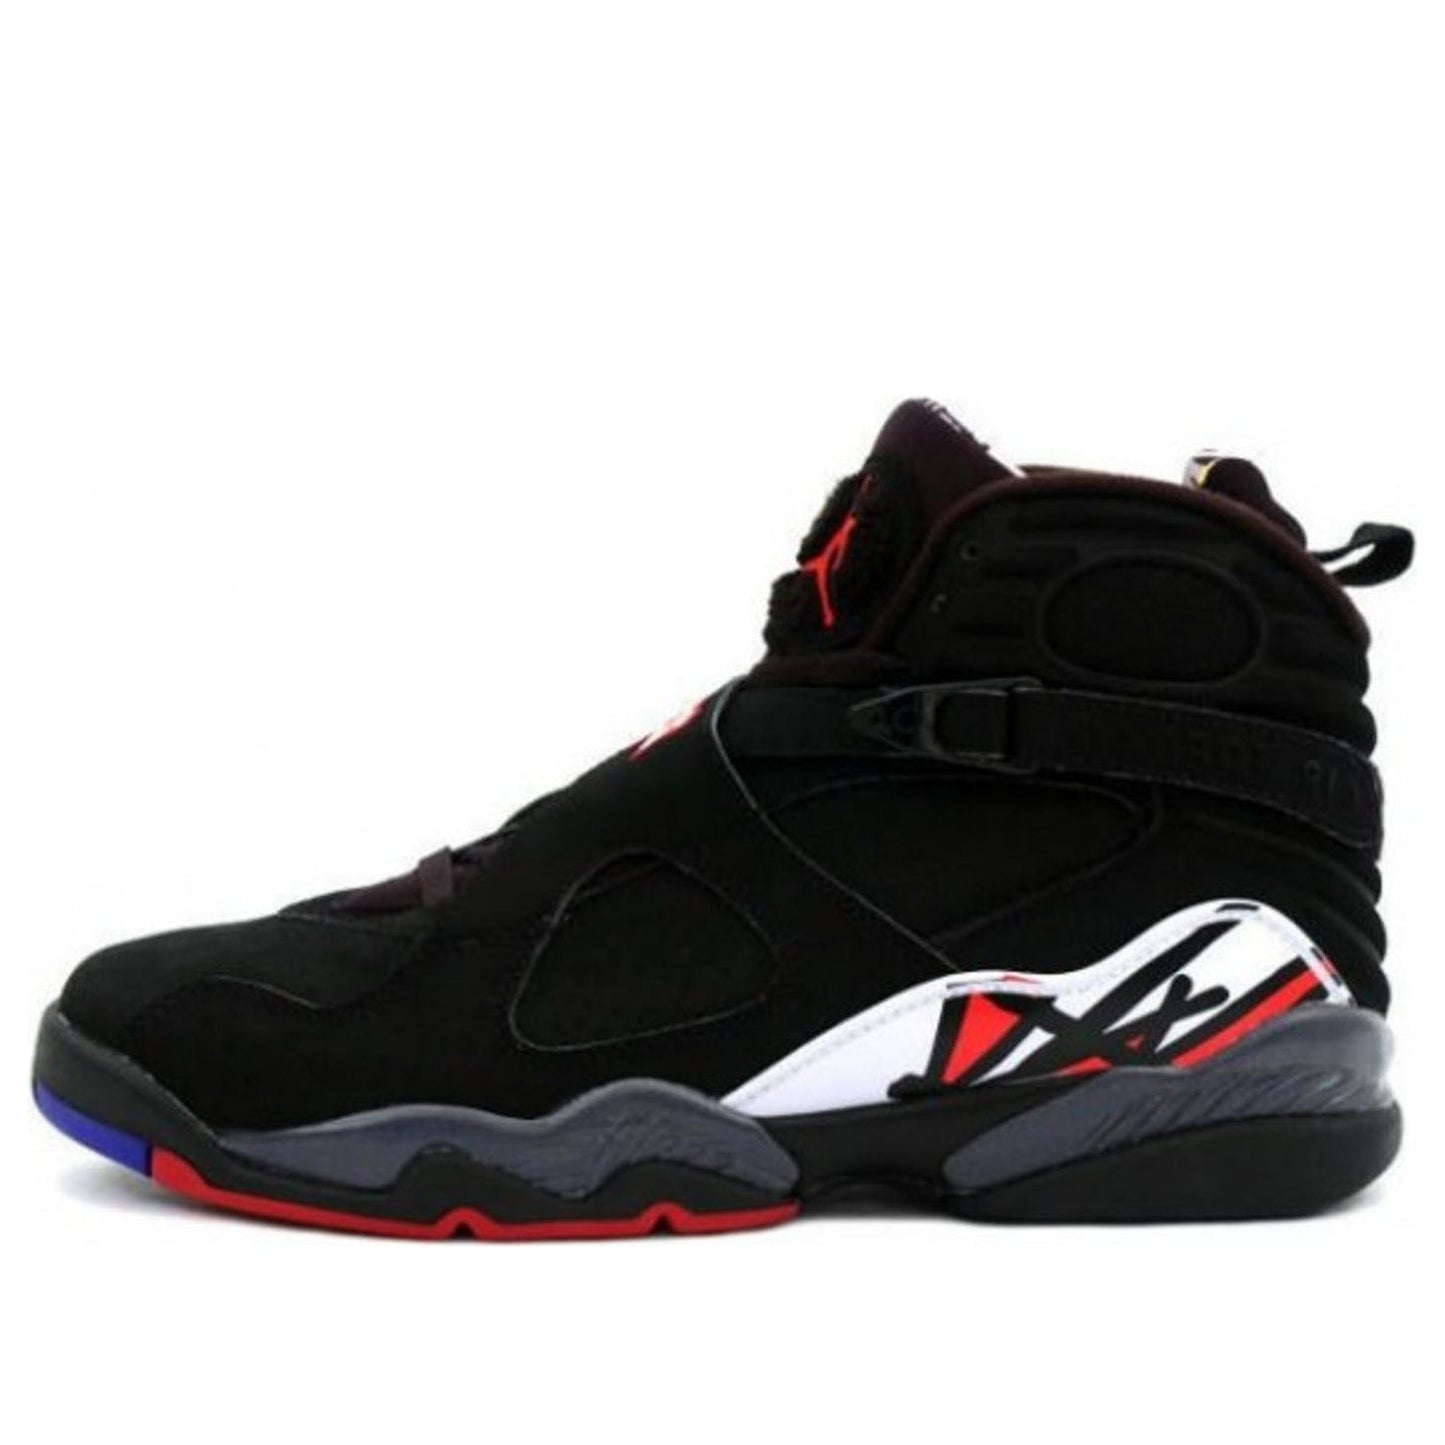 Air Jordan 8 Retro 'Playoff' 2013  305381-061 Vintage Sportswear